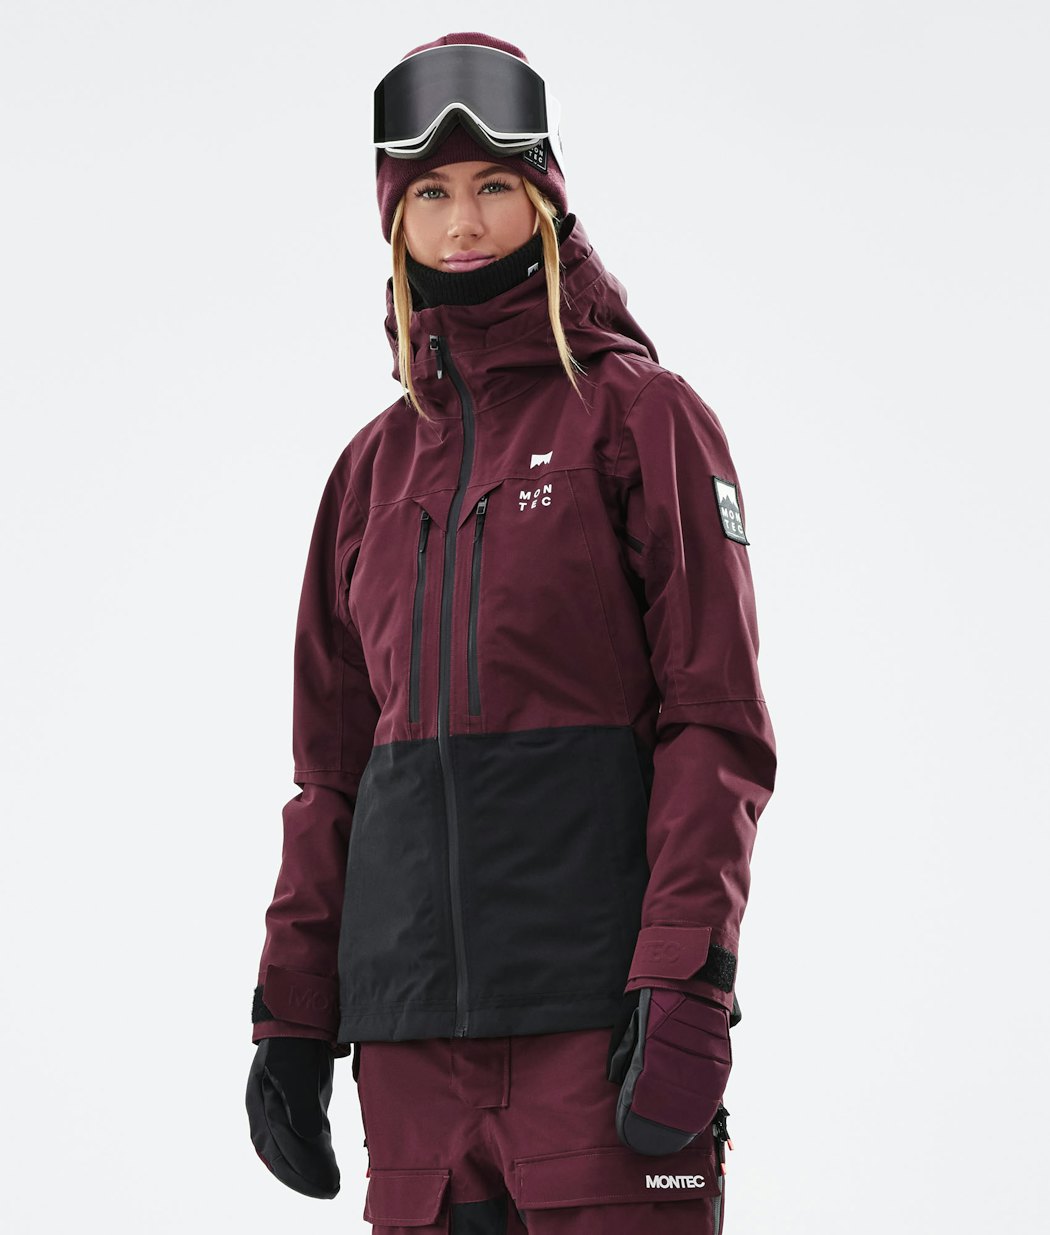 Moss W 2021 Snowboard Jacket Women Burgundy/Black Renewed